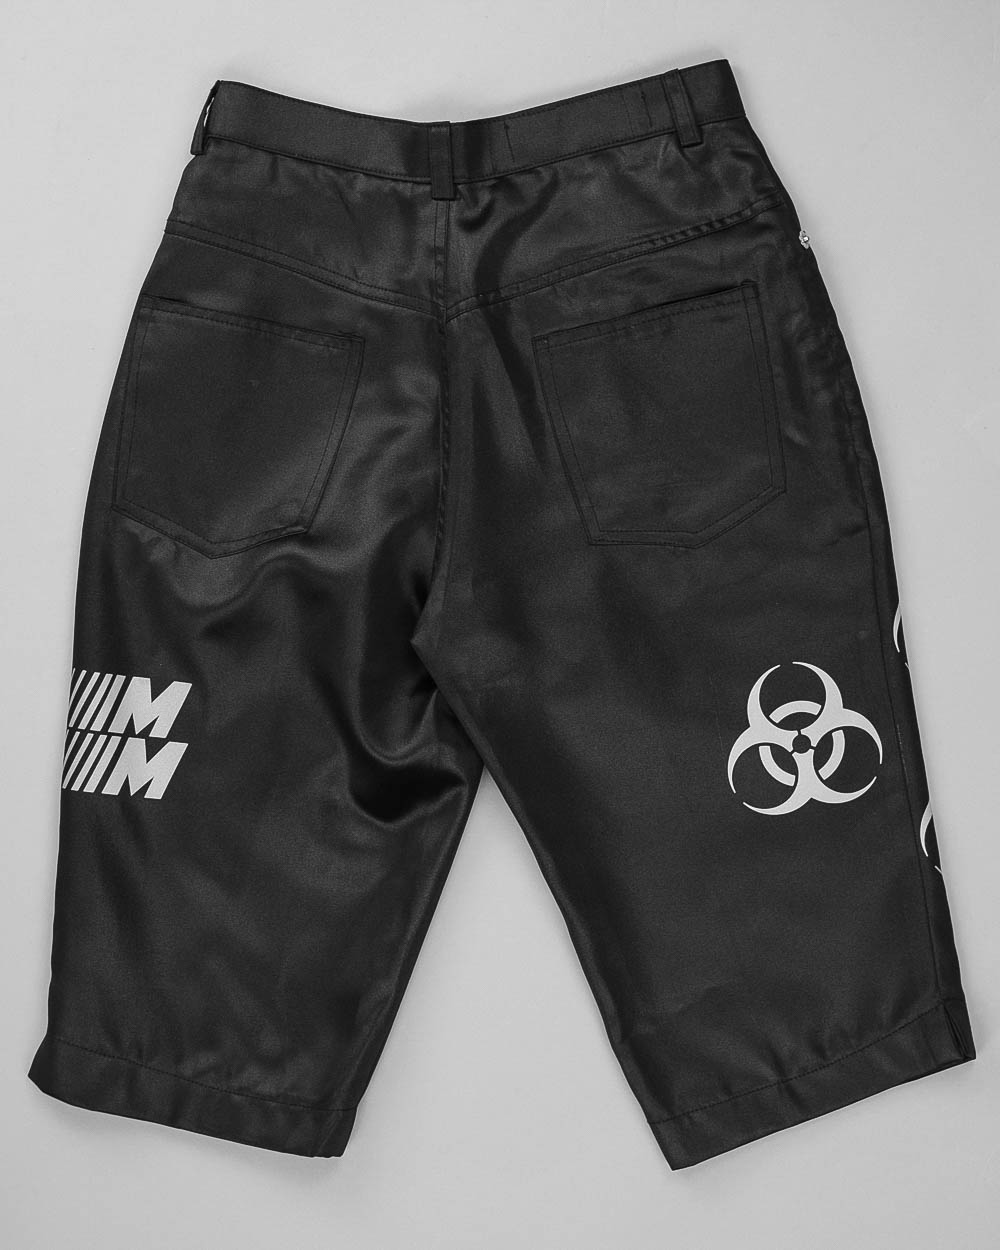 Toxic Shorts 3